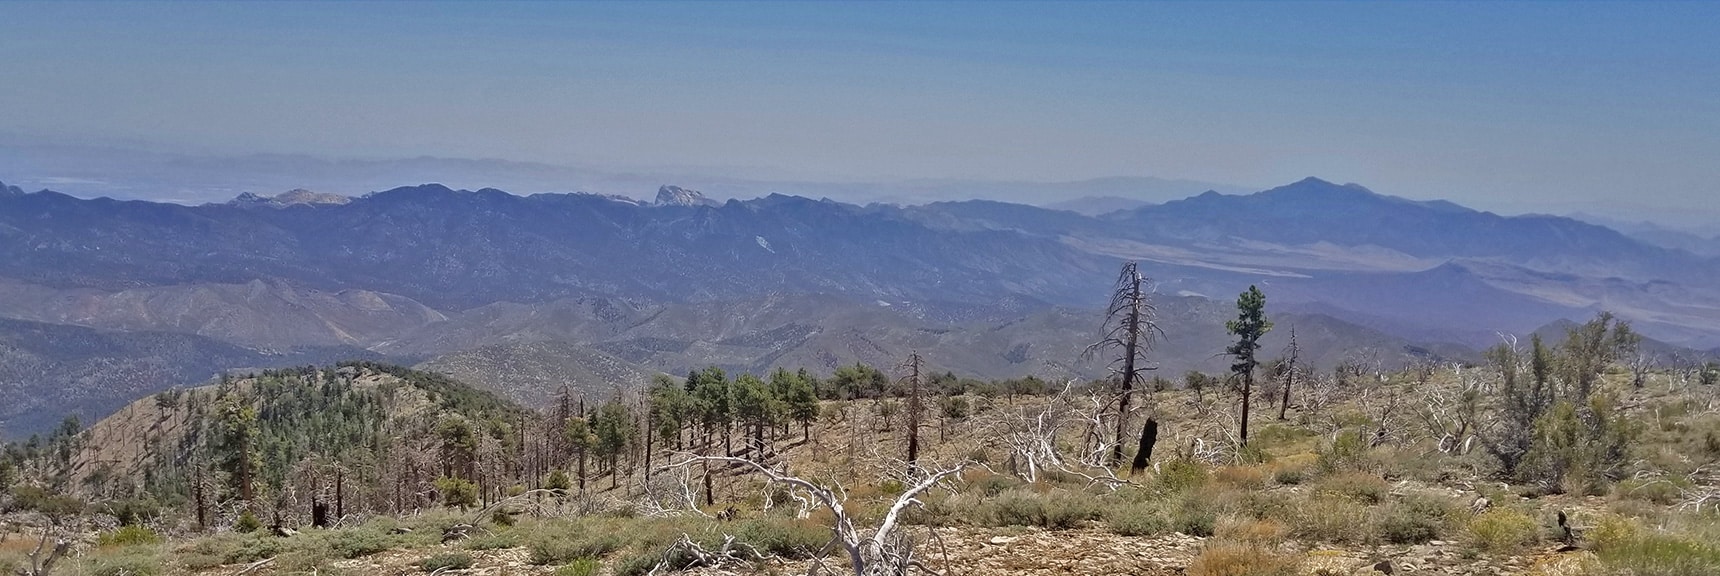 Wilson Ridge and Lovell Canyon to Potosi Mountain Viewed from Sexton Ridge | Griffith Peak Southern Approach from Sexton Ridge Above Lovell Canyon, Nevada